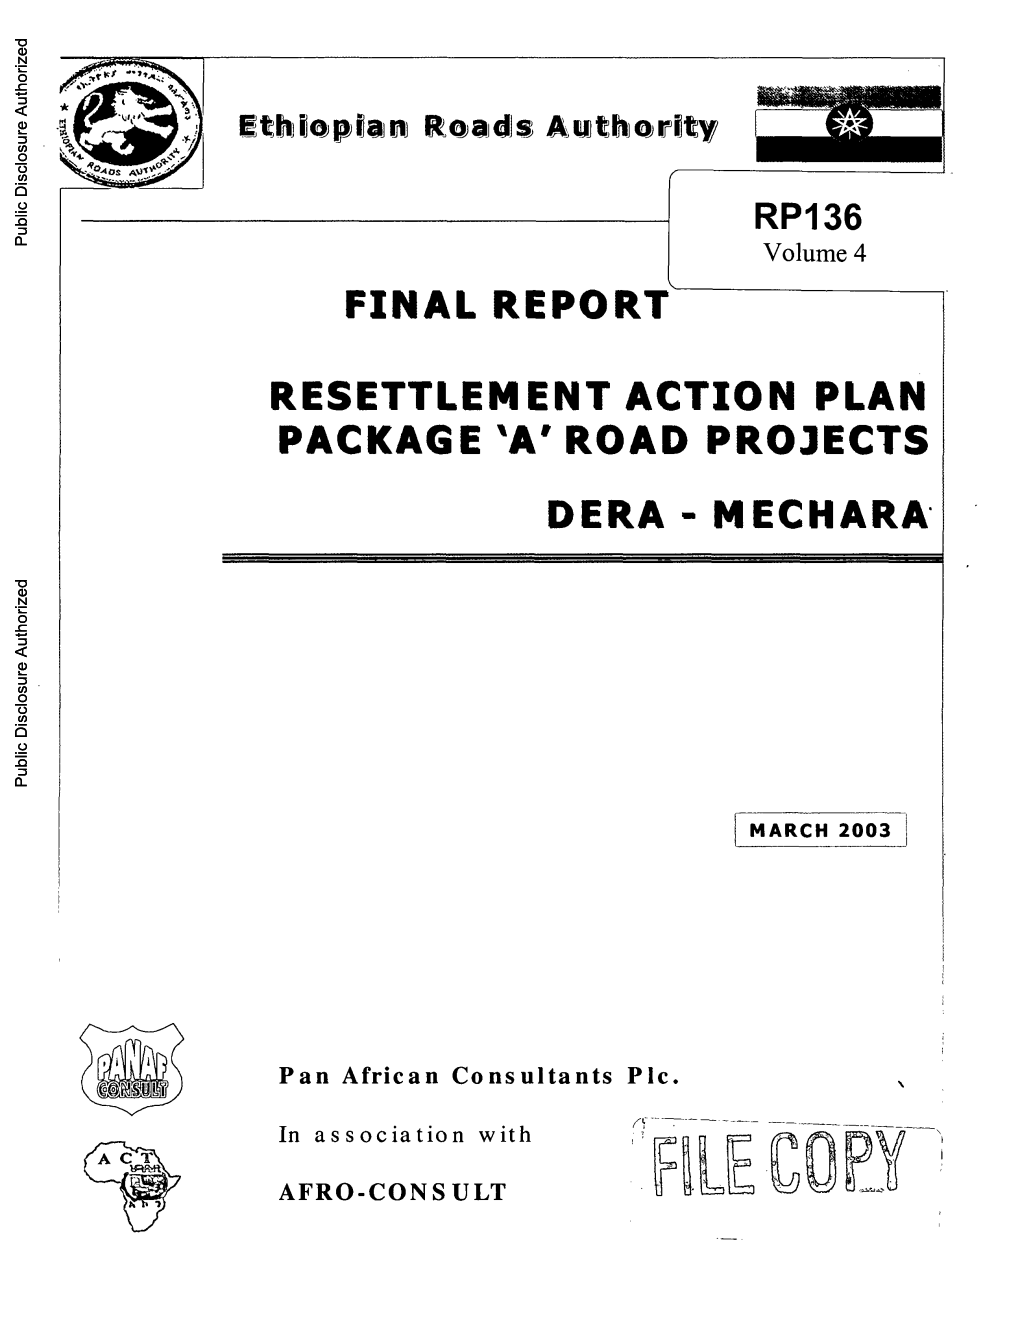 Final Report Resettlement Action Plan Package